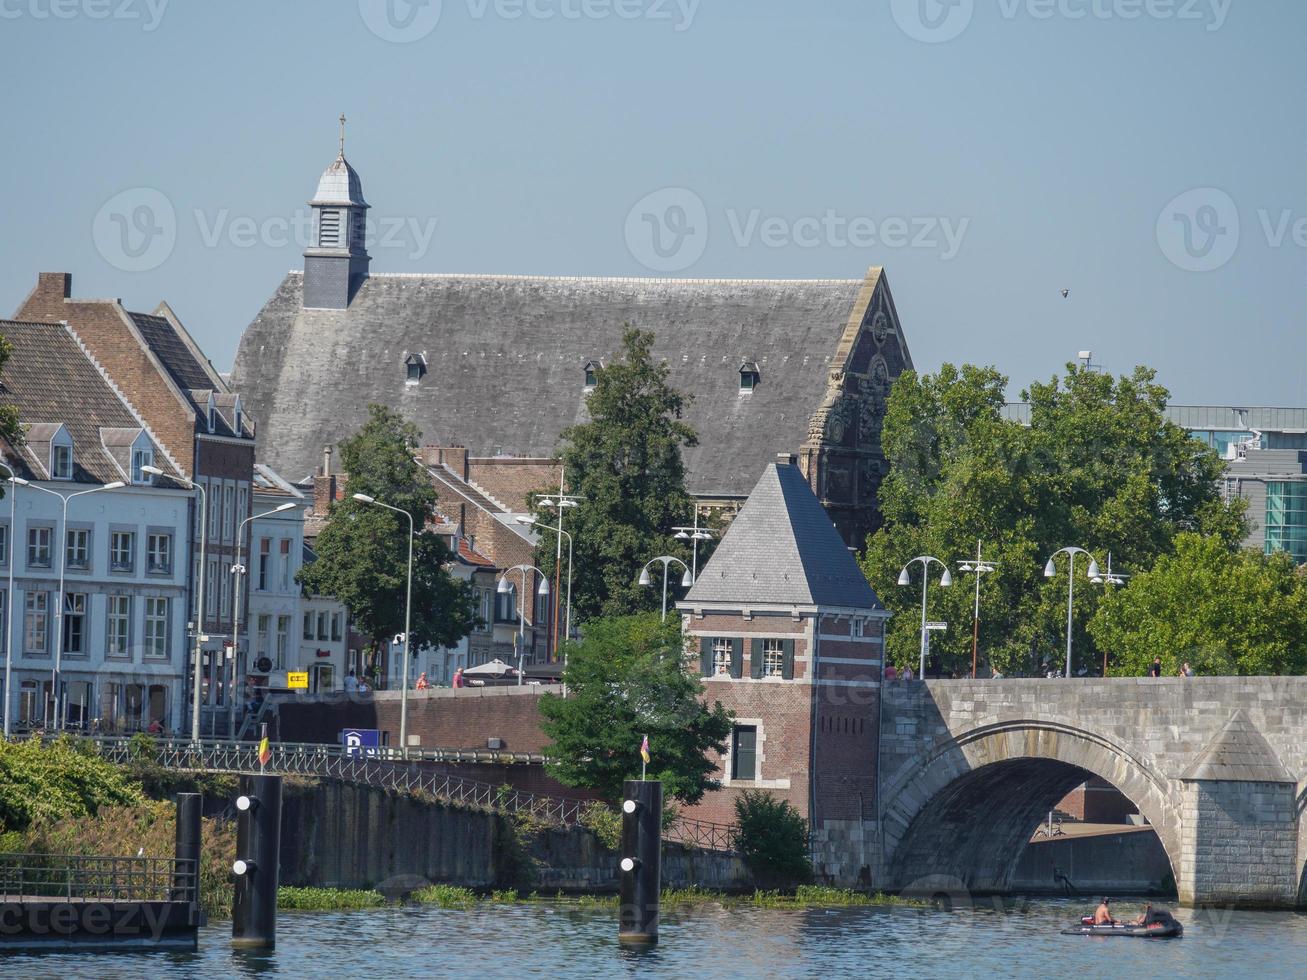 la città di Maastricht sul fiume Maas nei Paesi Bassi foto